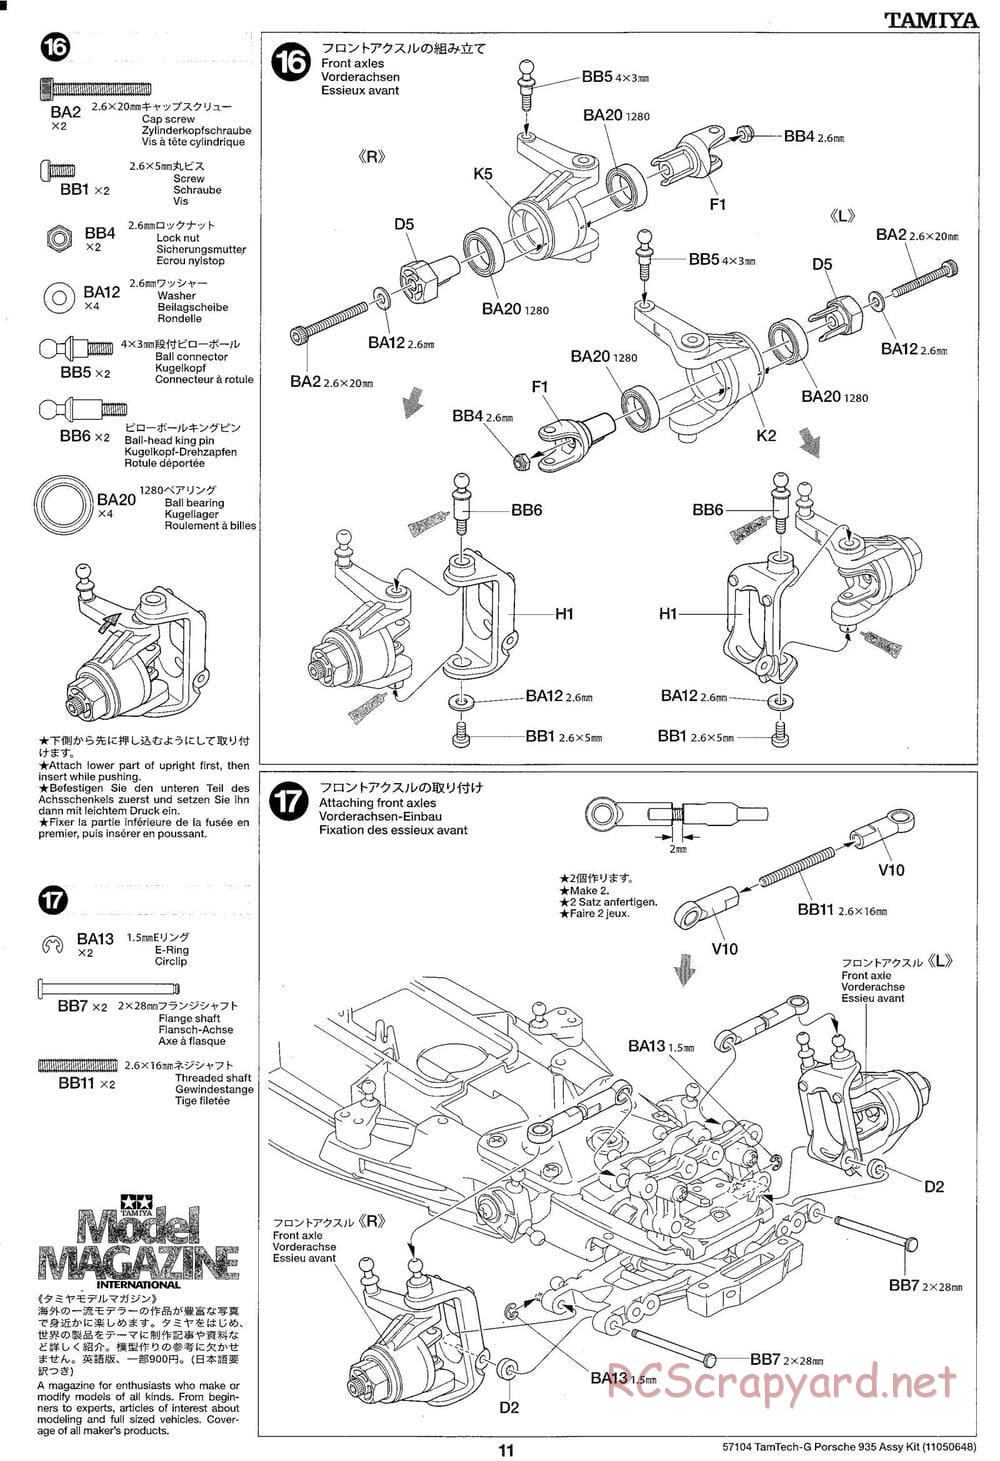 Tamiya - Porsche 935 Martini - GT-01 Chassis - Manual - Page 11